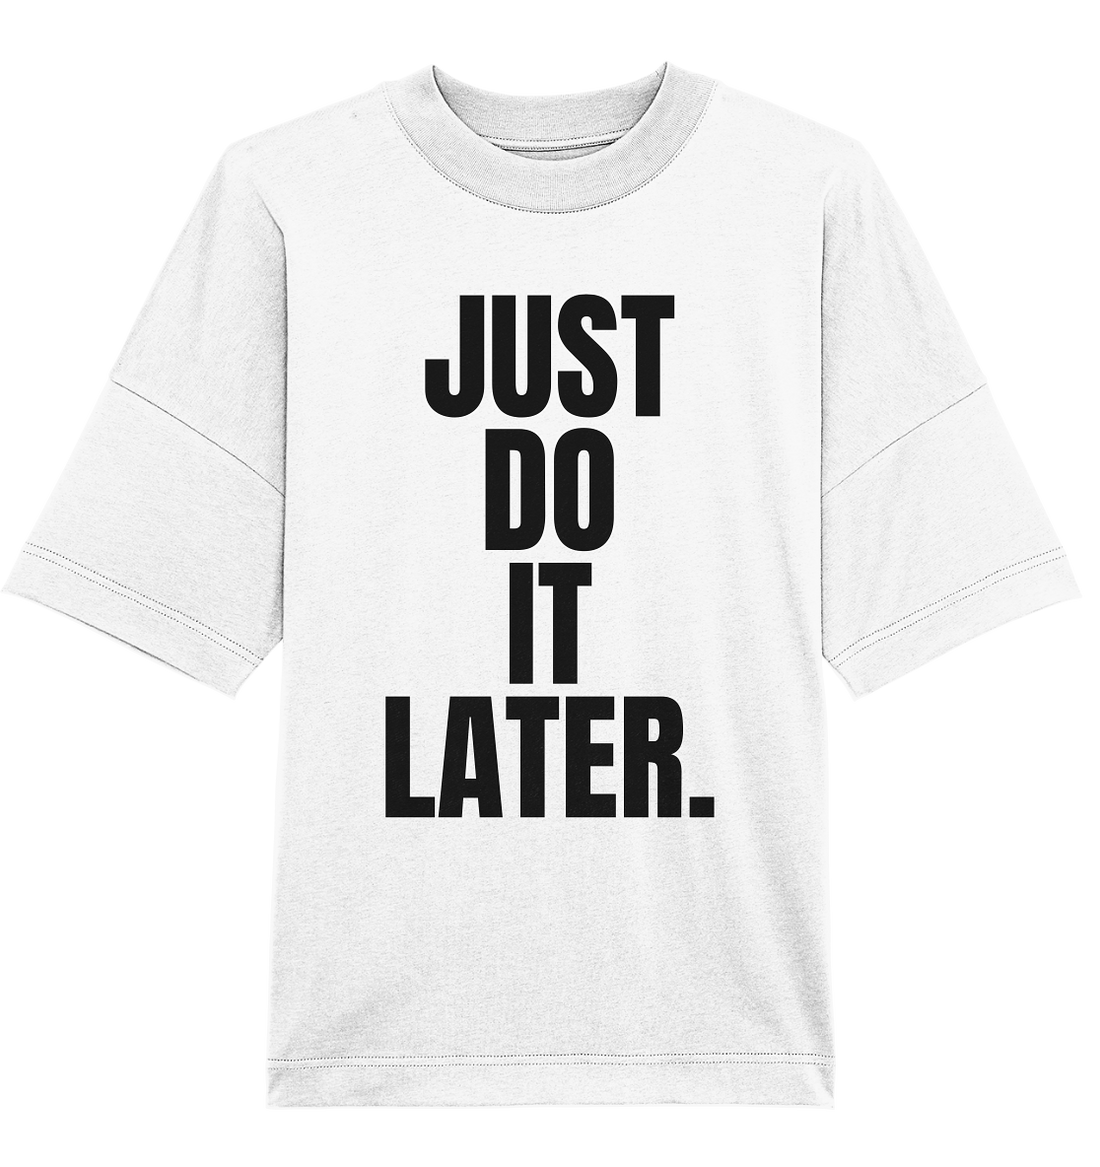 Just do it later - Oversized Unisex T-Shirt